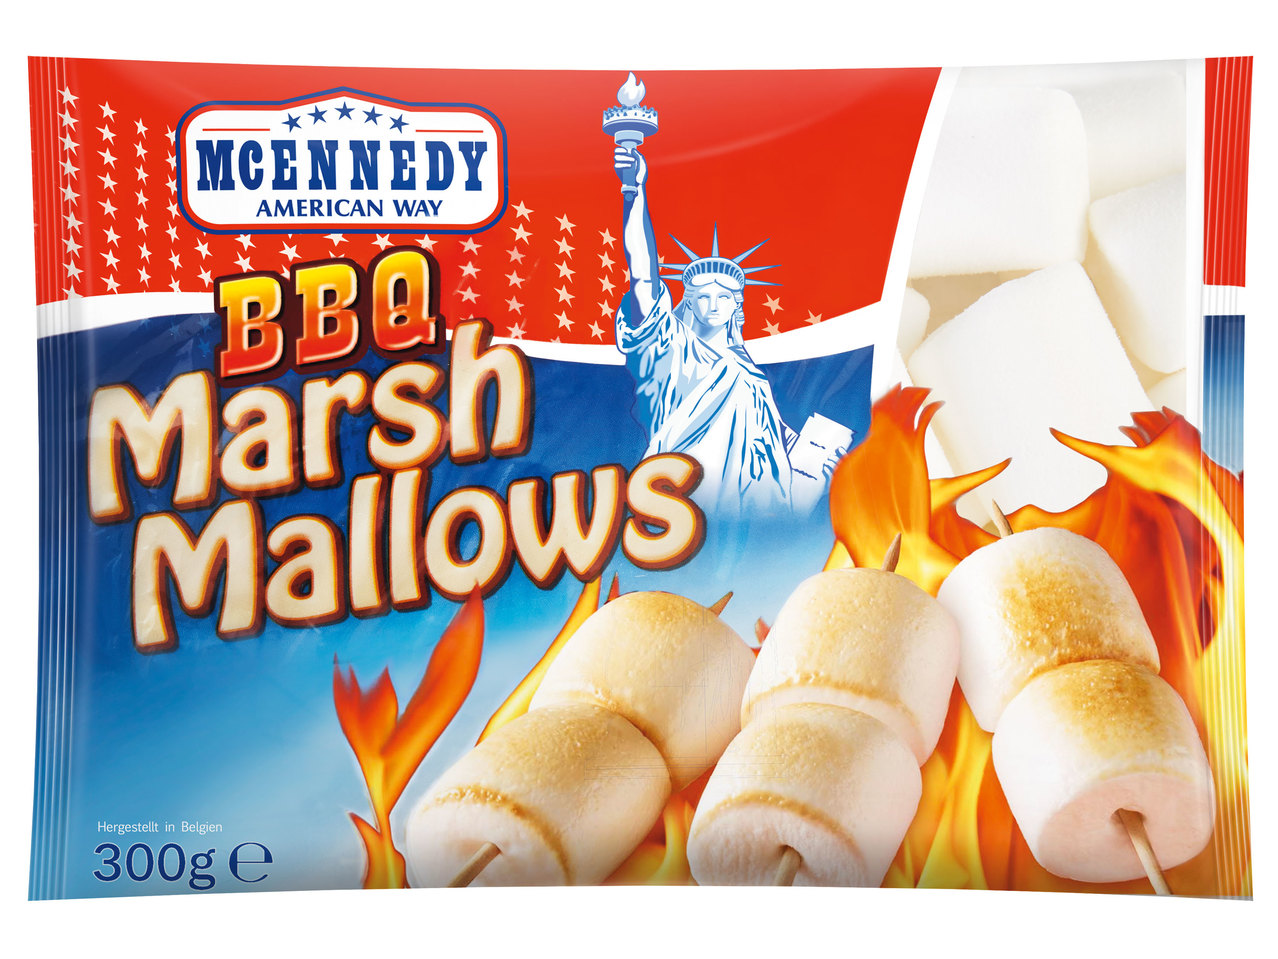 MCENNEDY BBQ Marsh Mallows